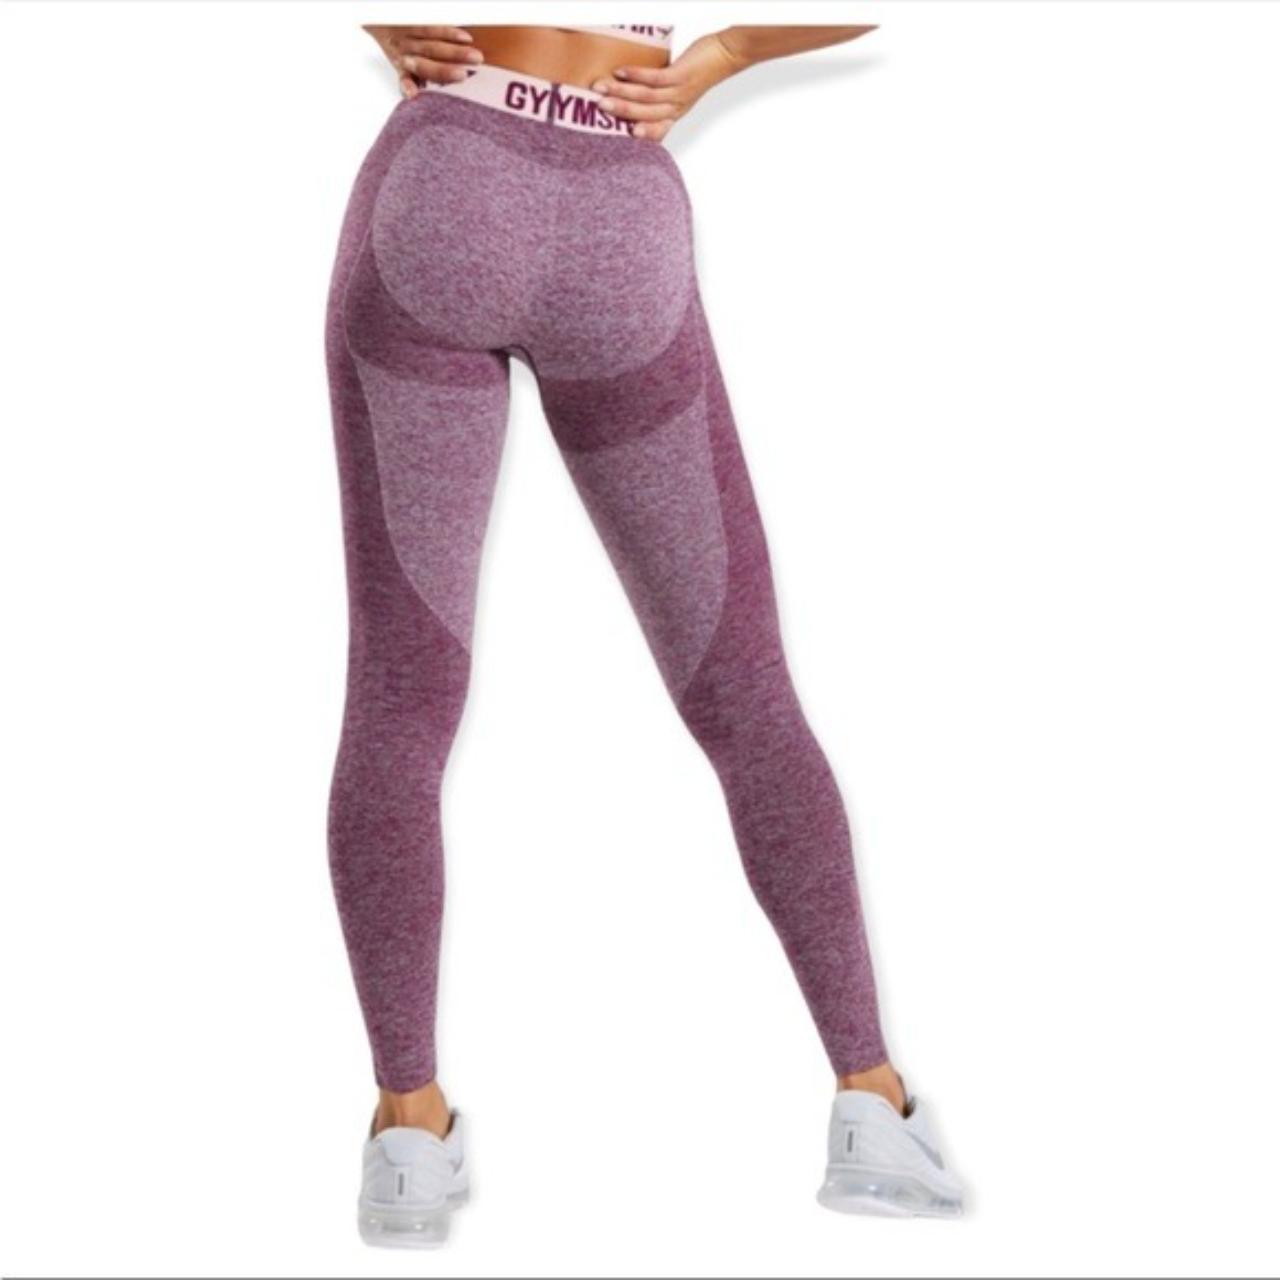 Gymshark Flex High Rise Leggings in Grey/Pink Marl, - Depop